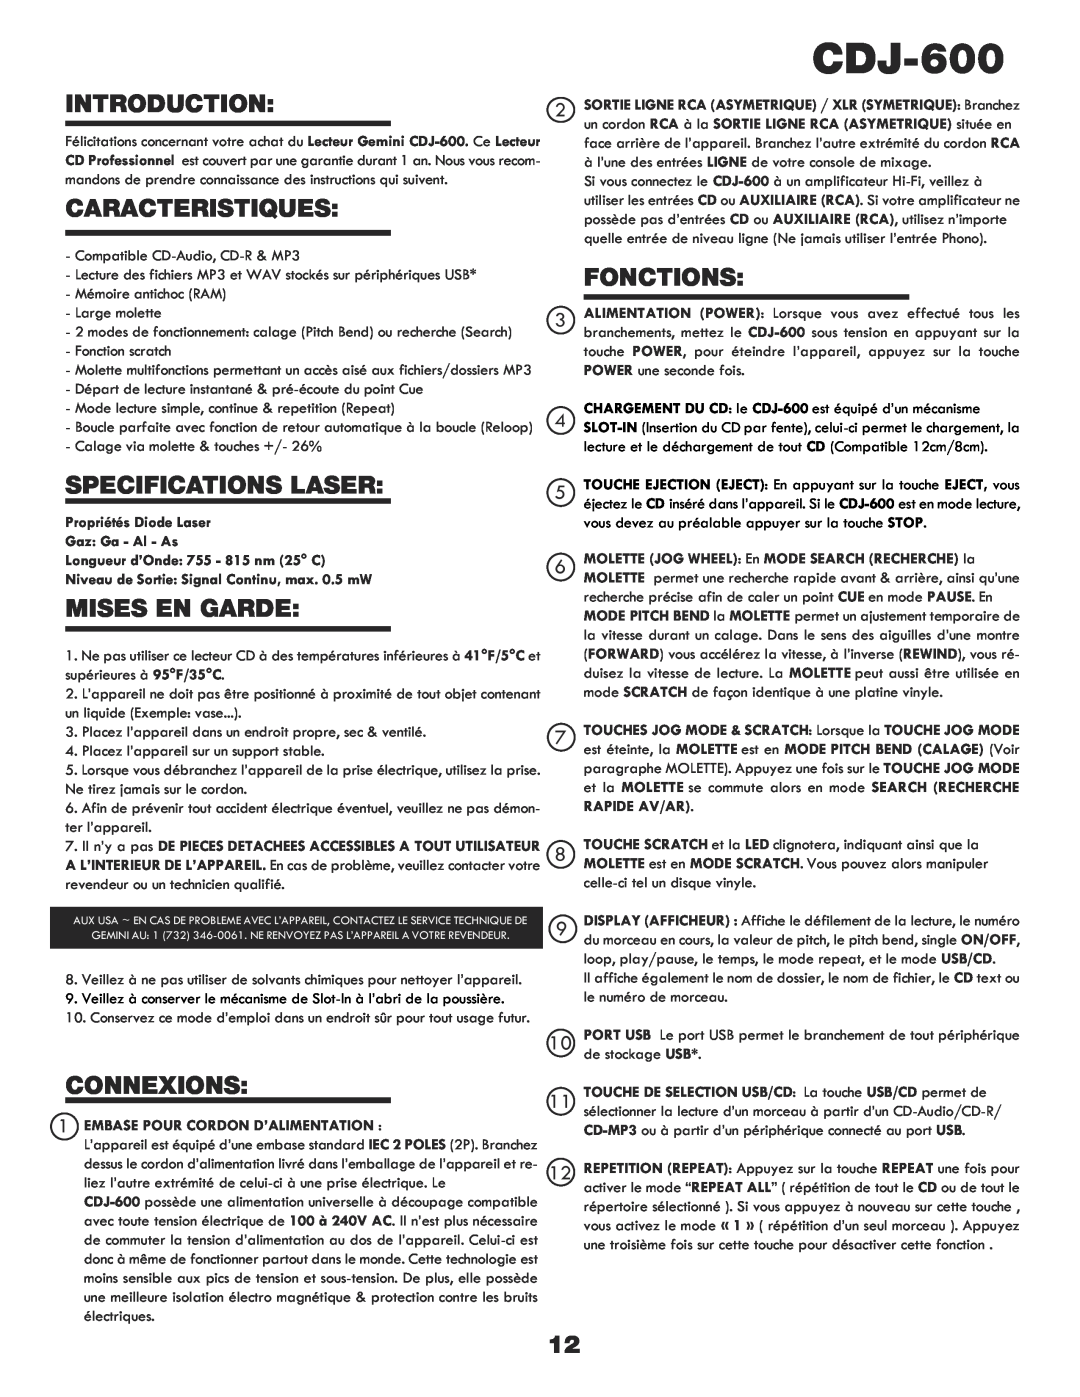 Gemini CDJ-600 manual Caracteristiques, Specifications Laser, Mises En Garde, Connexions, Fonctions, Introduction 